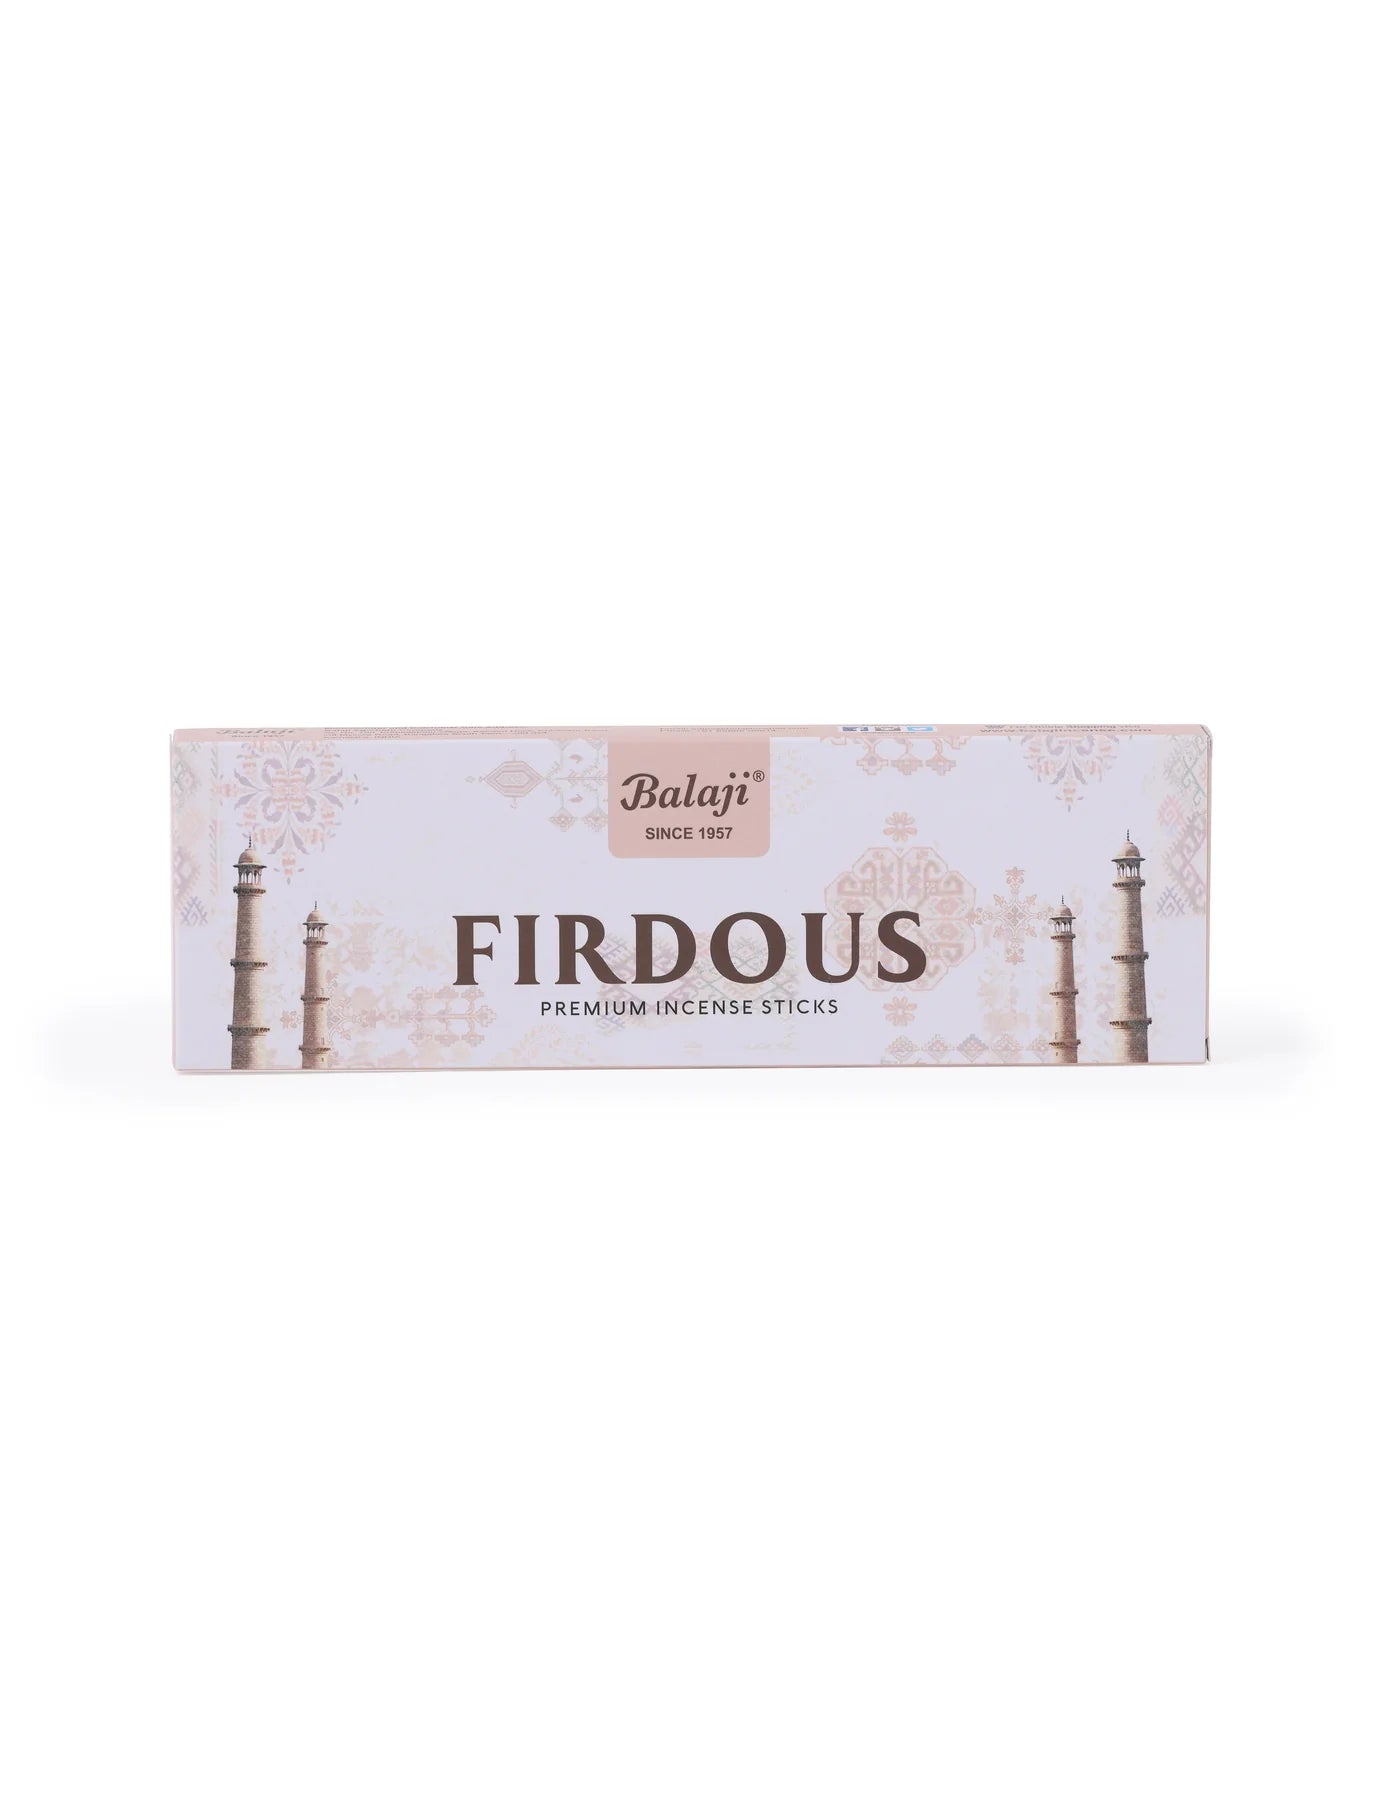 Firdous - Premium incense sticks by Balaji Agarbatti